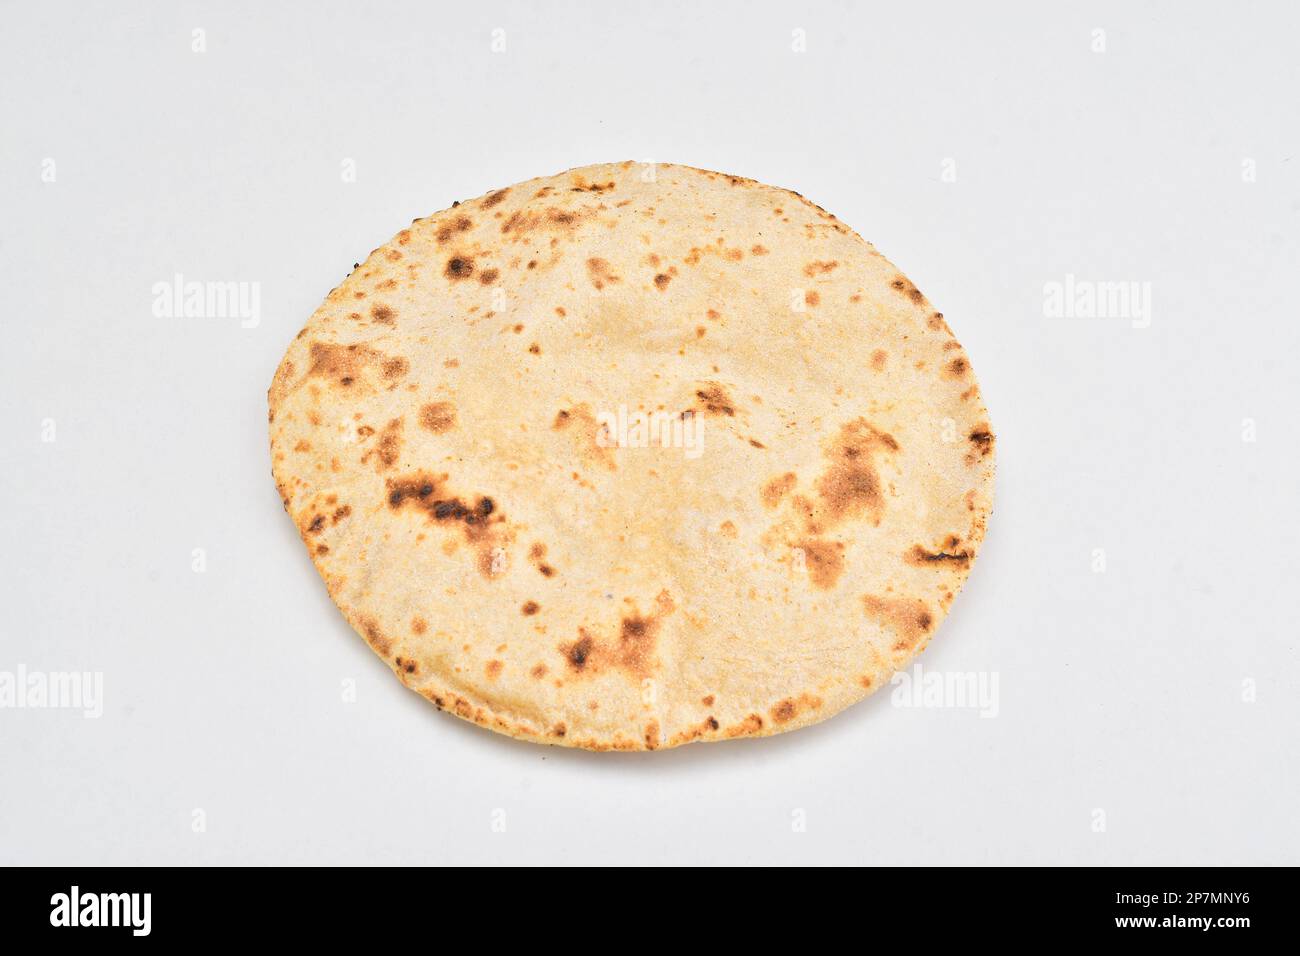 https://c8.alamy.com/comp/2P7MNY6/tawa-roti-isolated-on-white-background-indian-wheat-bread-2P7MNY6.jpg